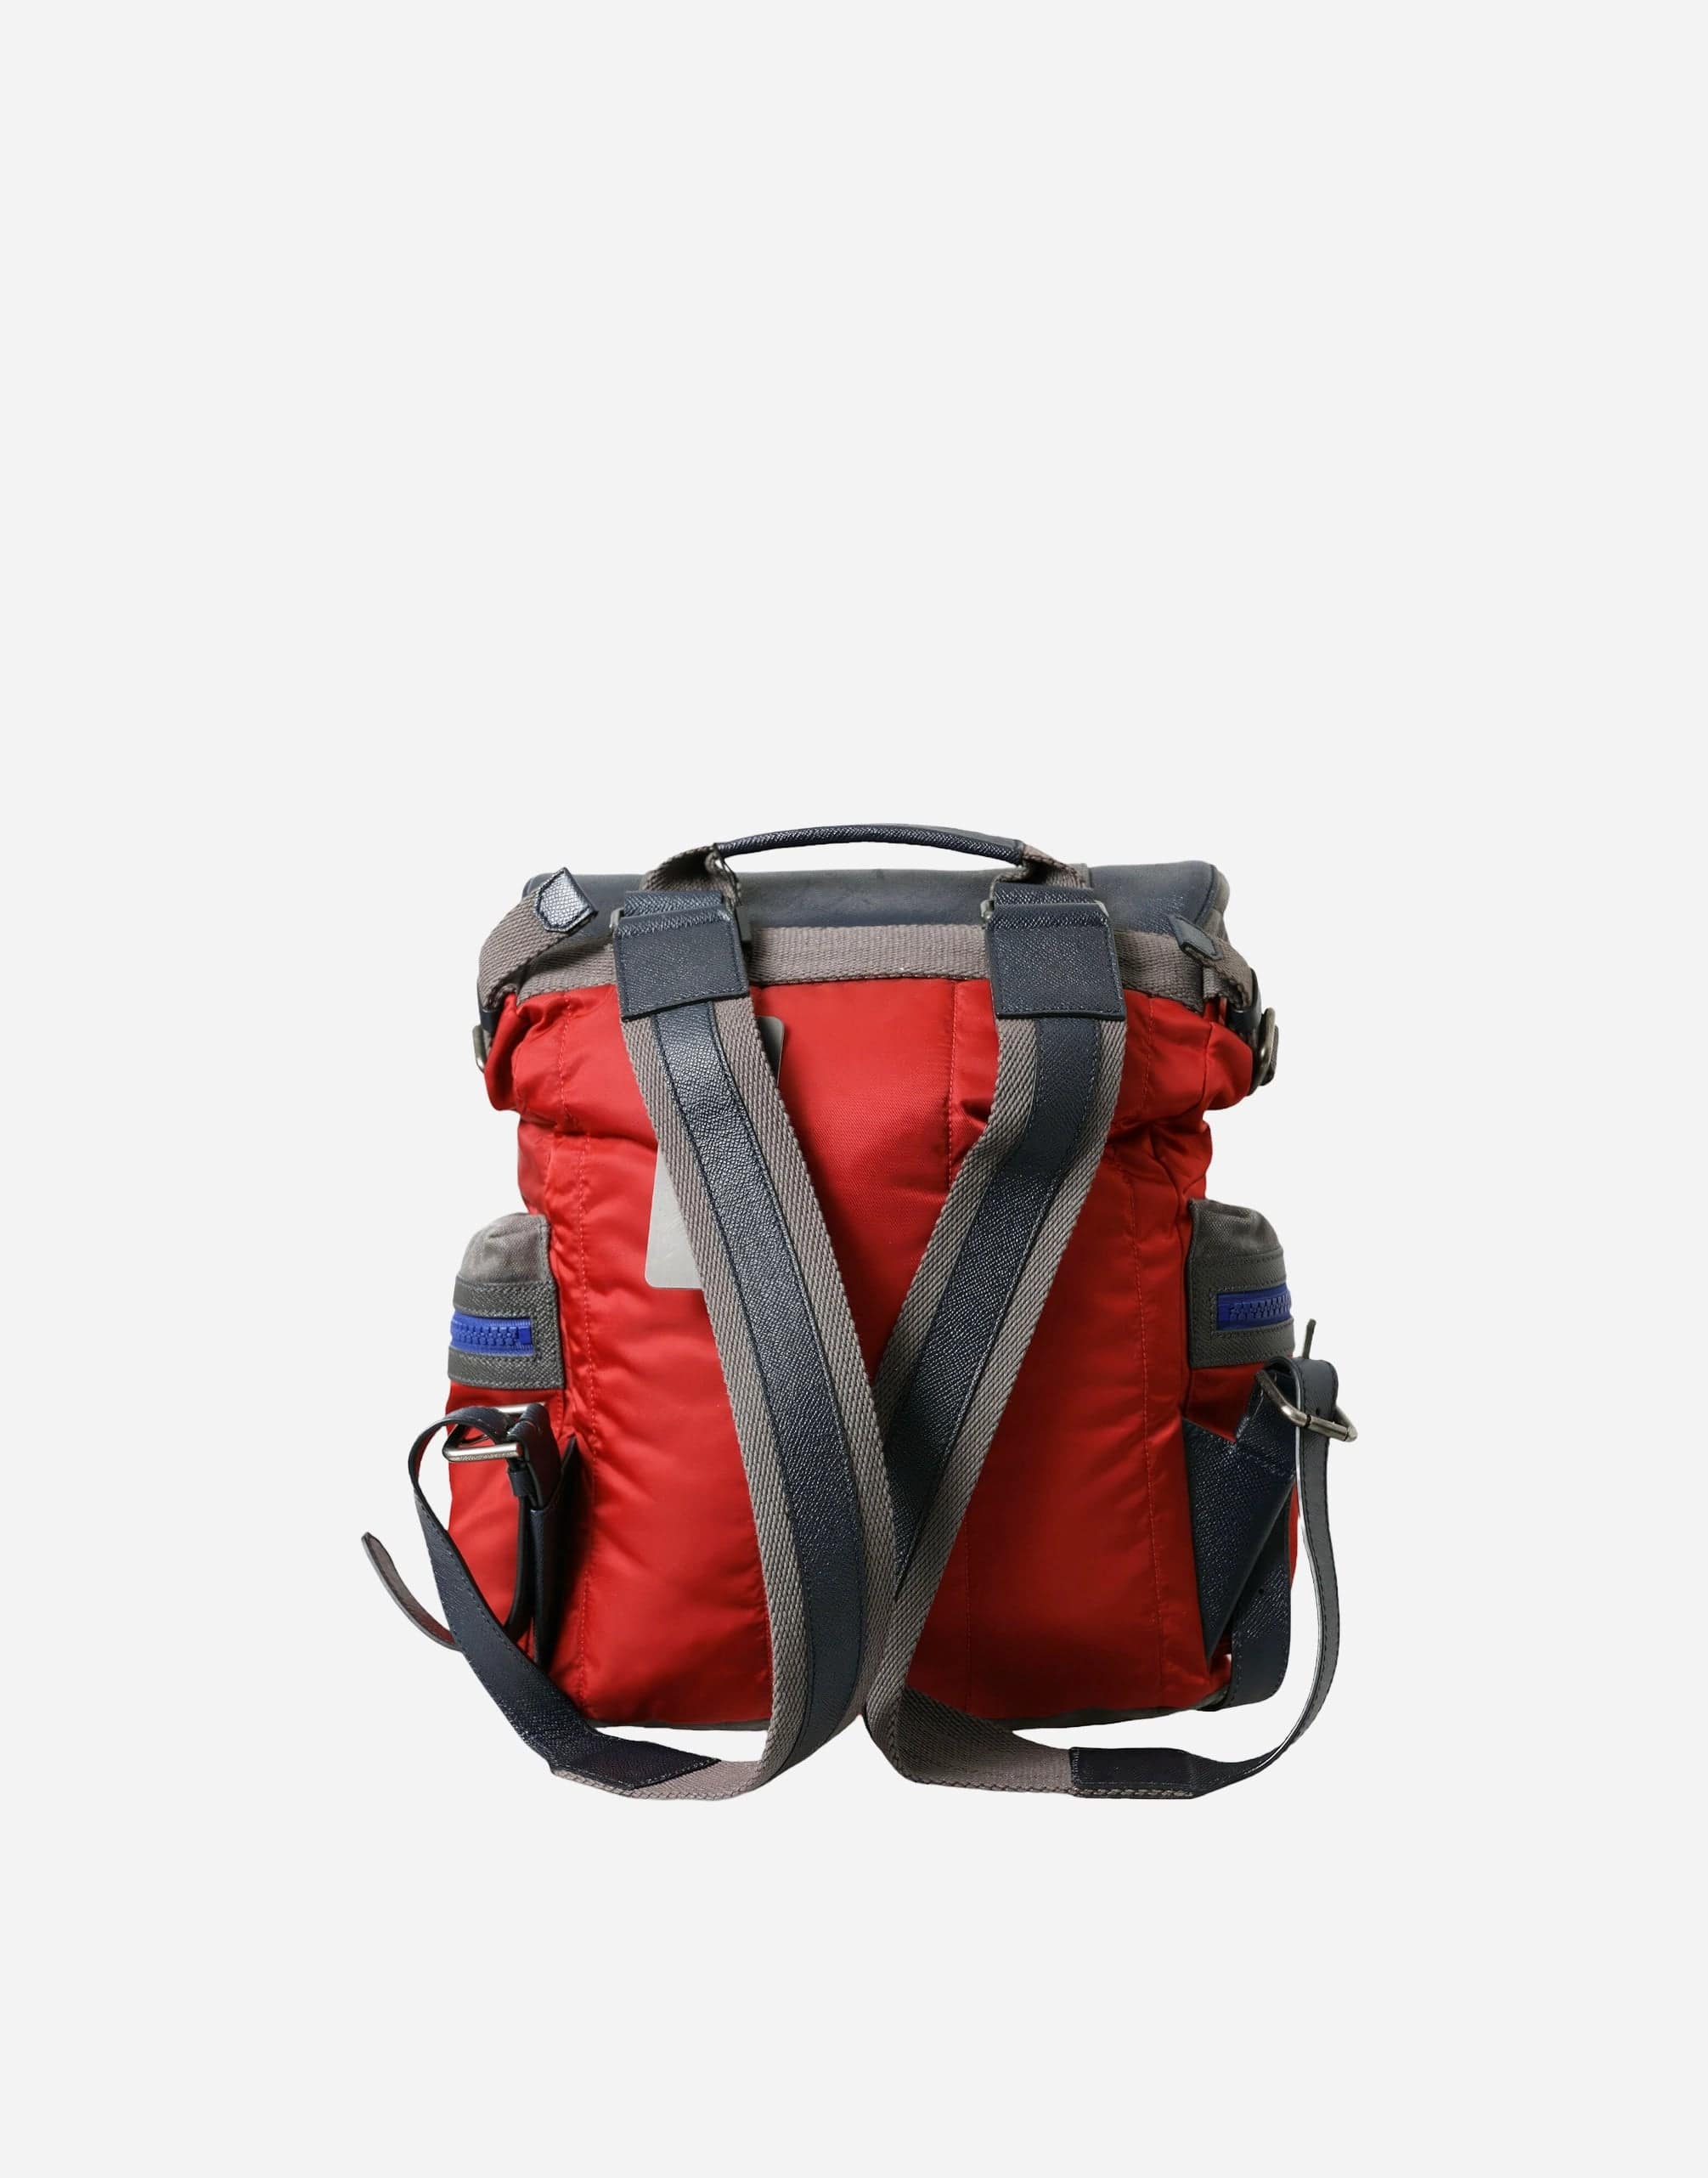 Mixed-Materials Rucksack Backpack